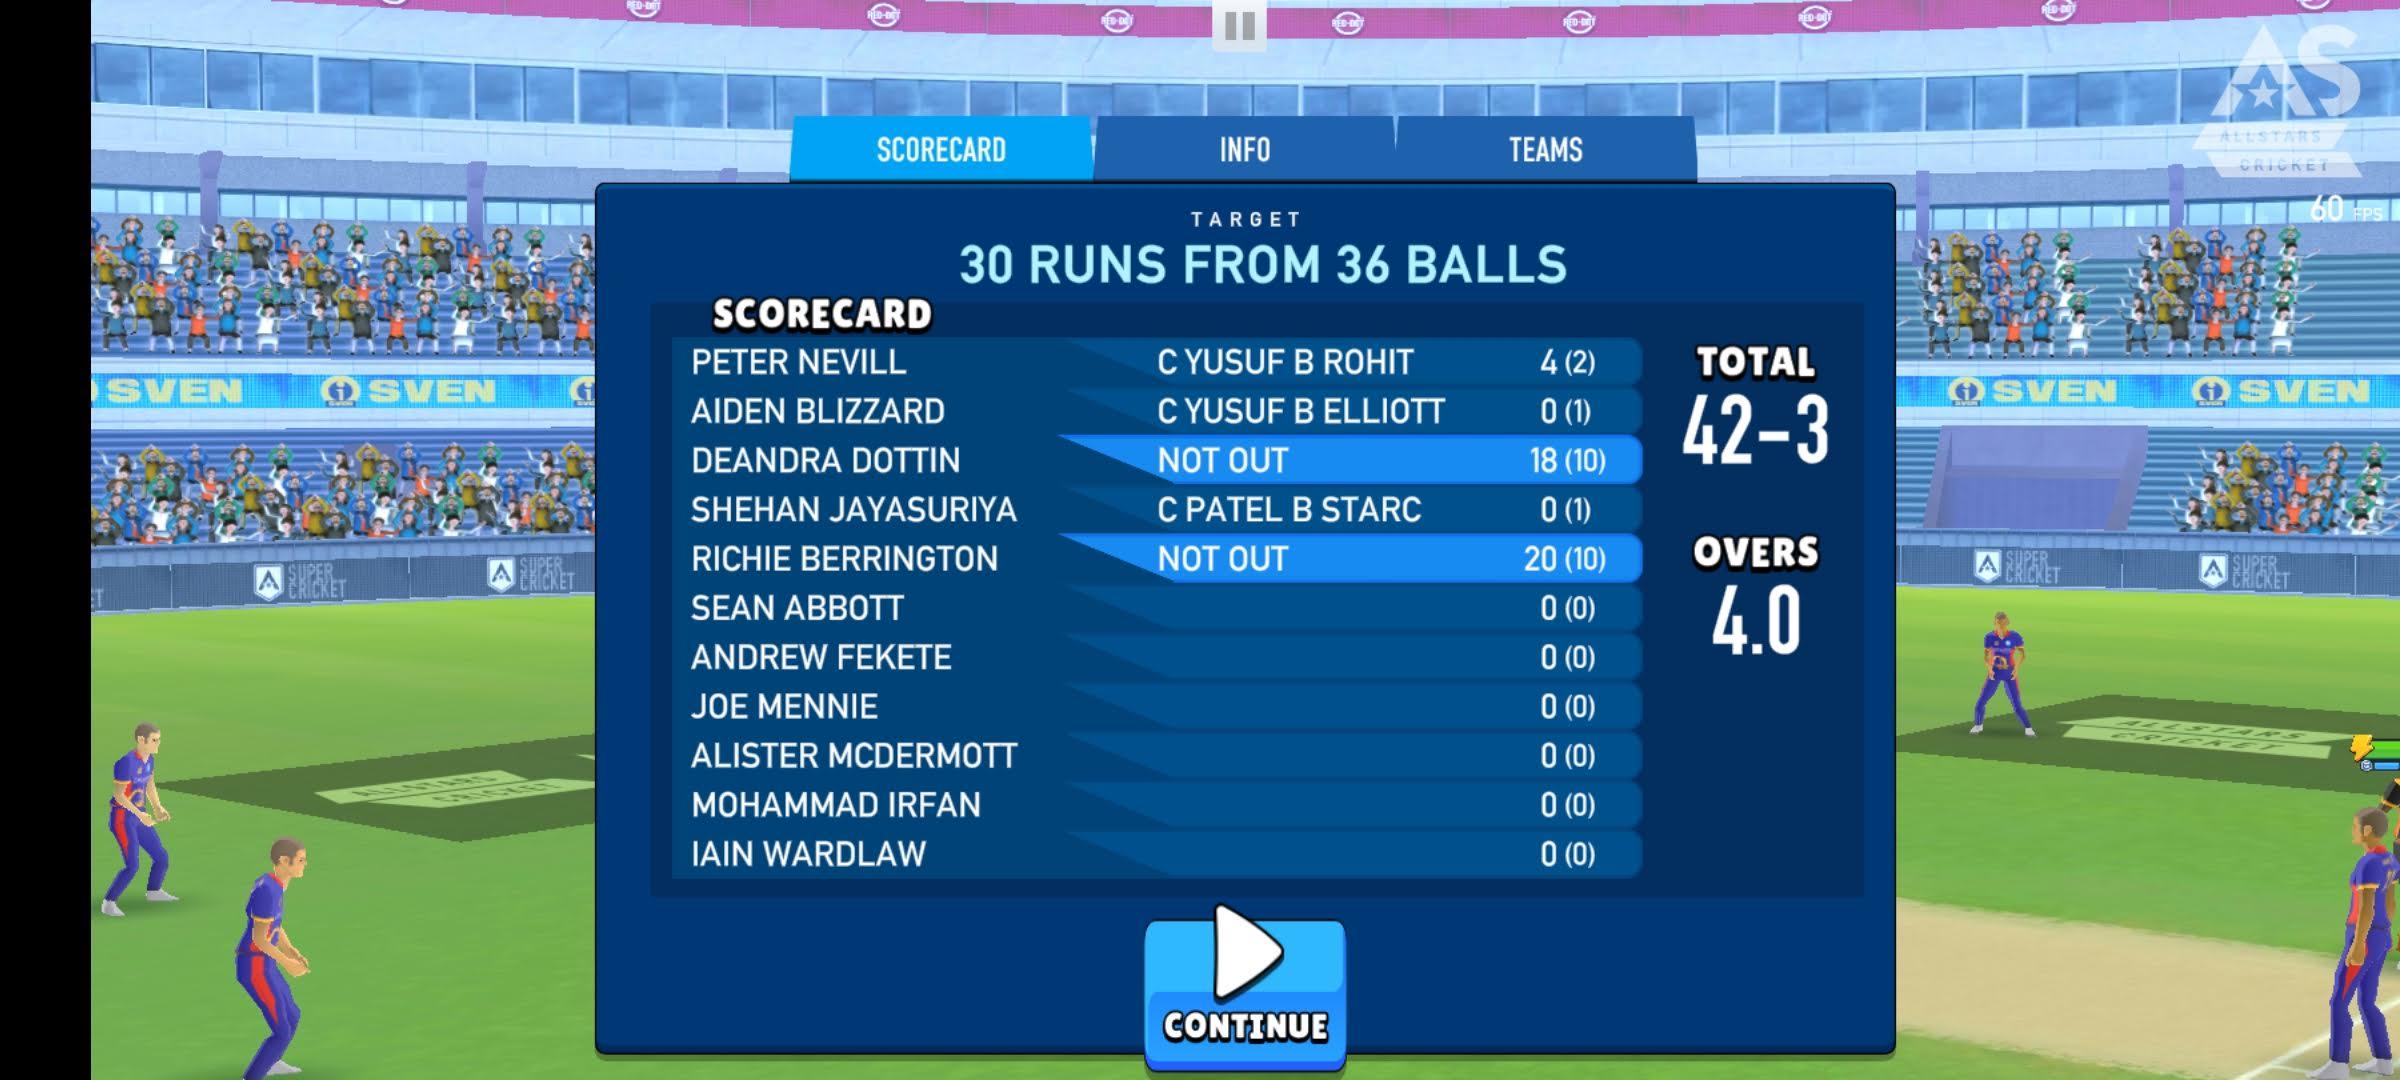 All Stars Cricket - Premier League Ultimate Team 0.0.1.857 Screenshot 6